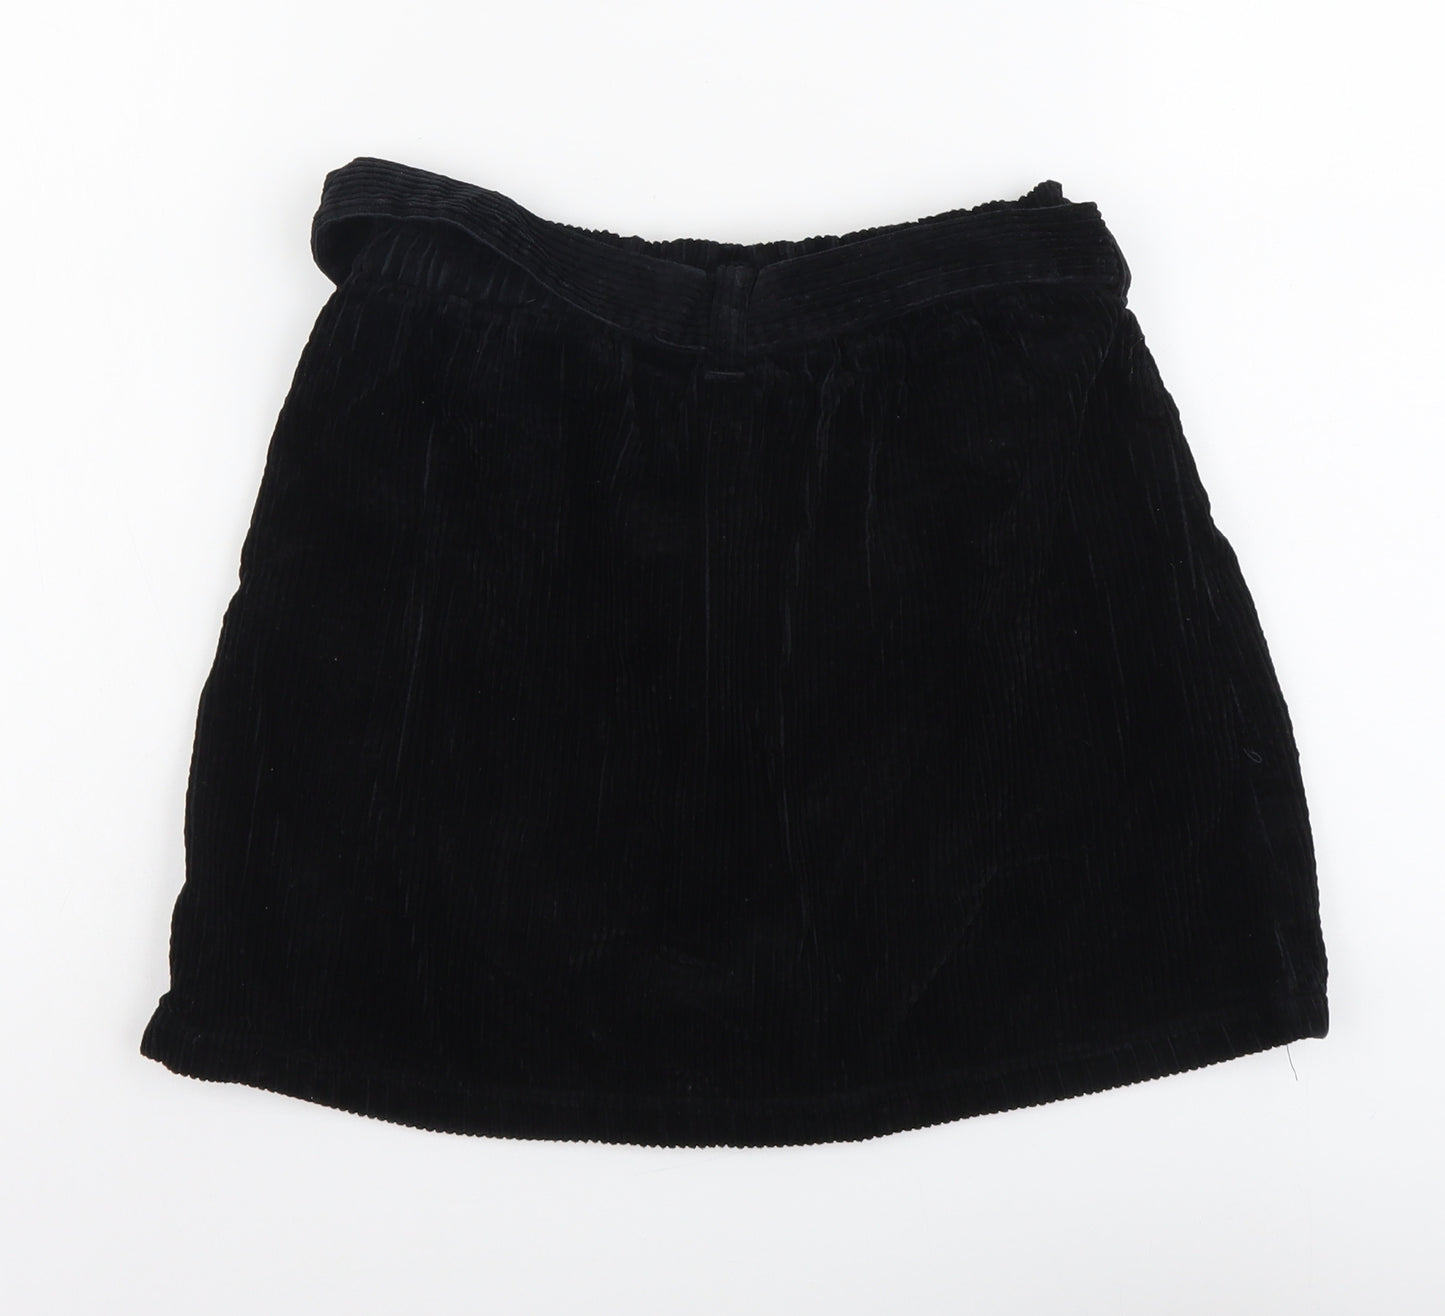 NEXT Girls Black Cotton Mini Skirt Size 13 Years Regular Button